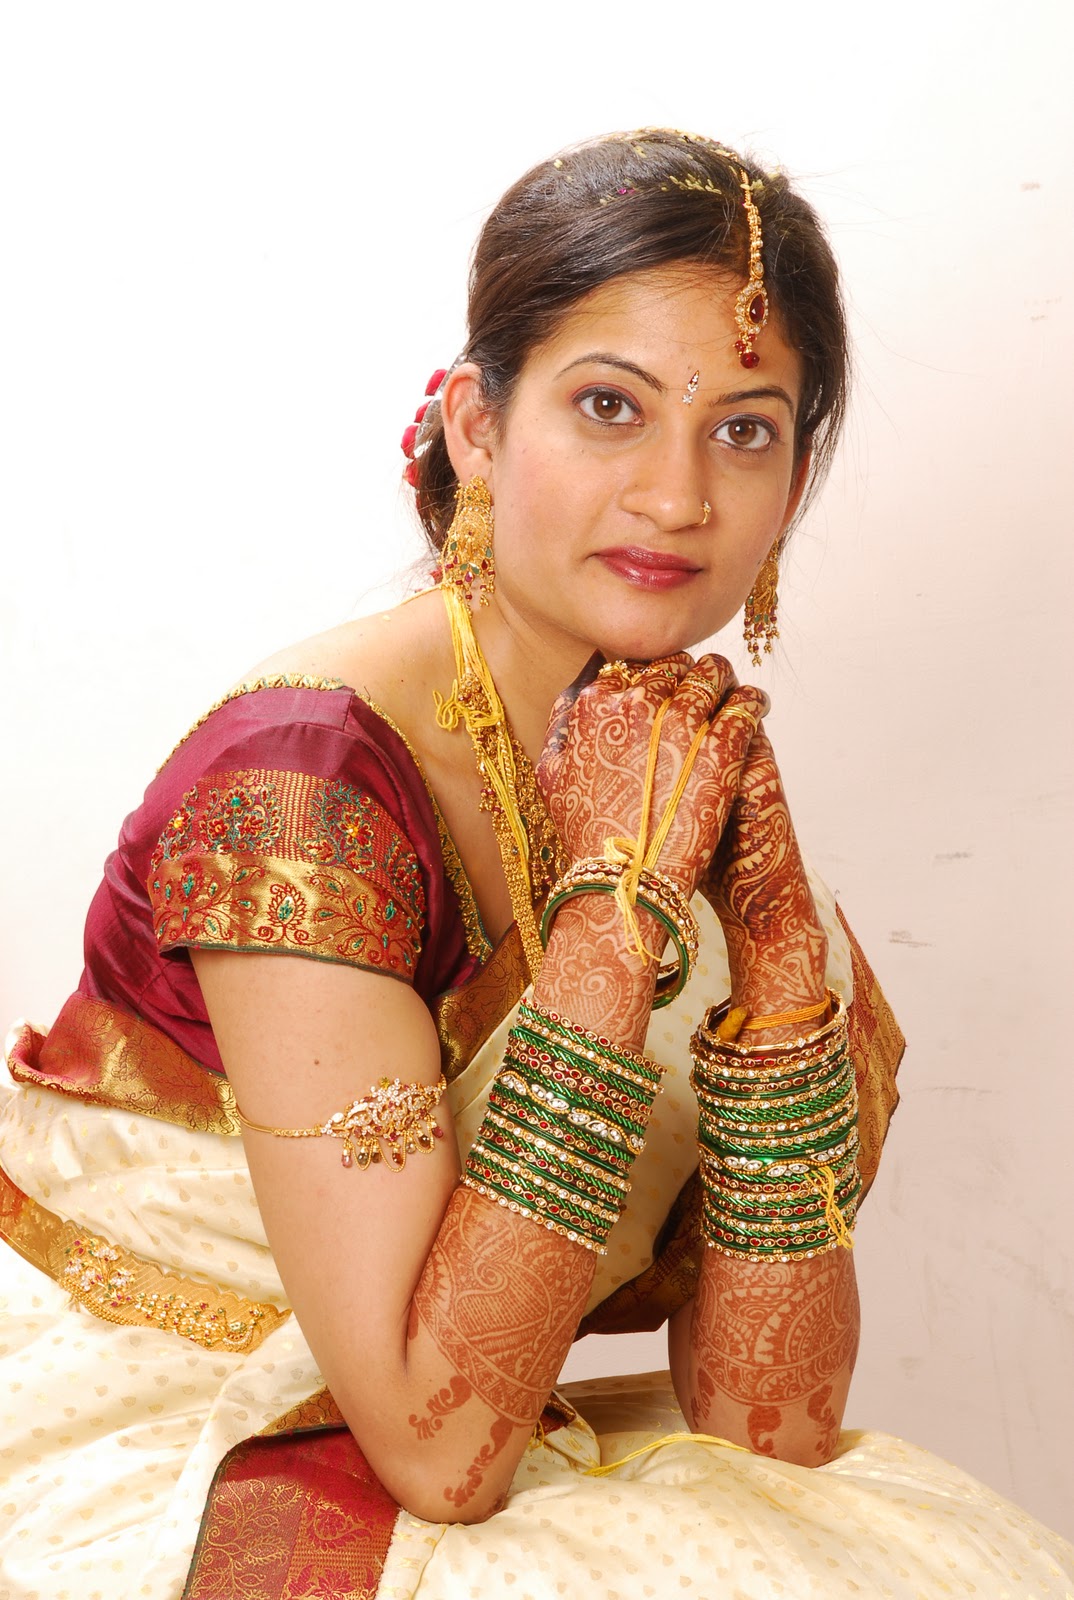 andhamina bhamalu : beautiful indian womens 552